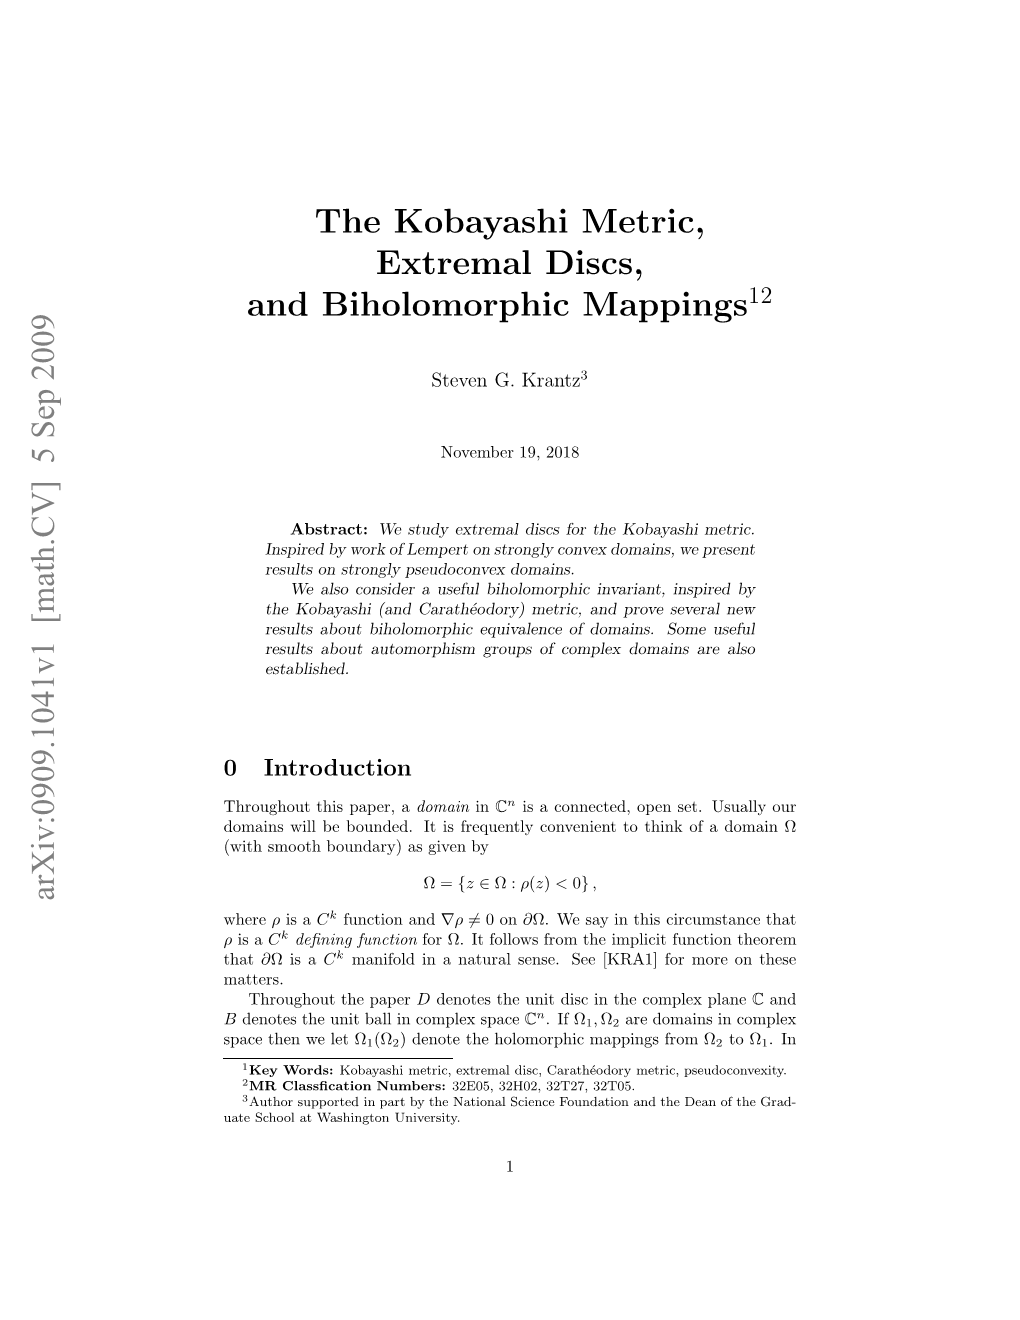 The Kobayashi Metric, Extremal Discs, and Biholomorphic Mappings